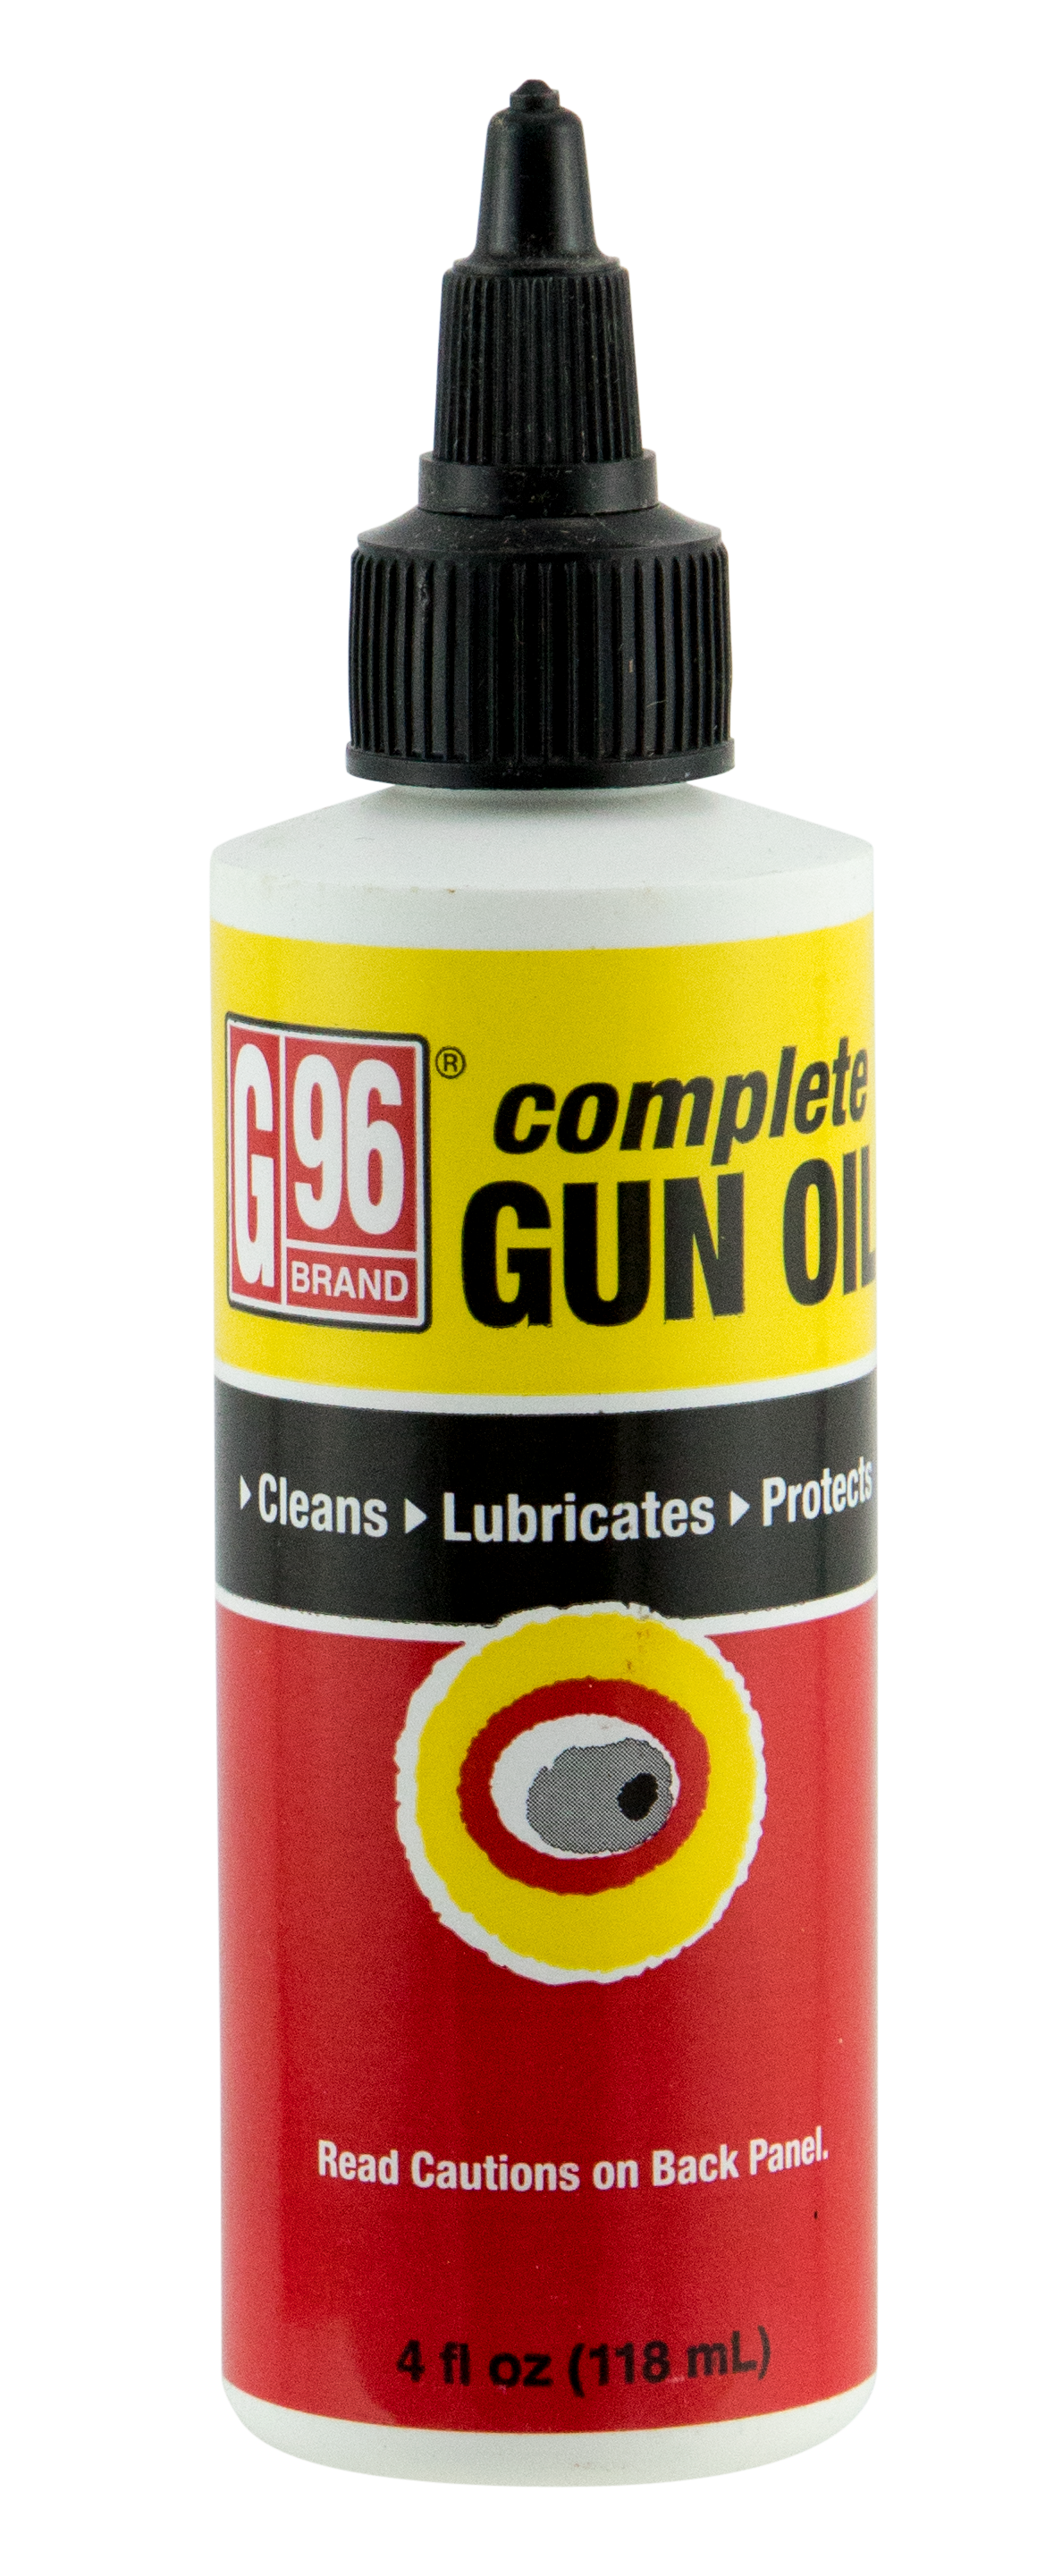 G96 1054 Gun Oil Cleans, Lubricates, Prevents Rust & Corrosion 4 oz Squeeze Bottle